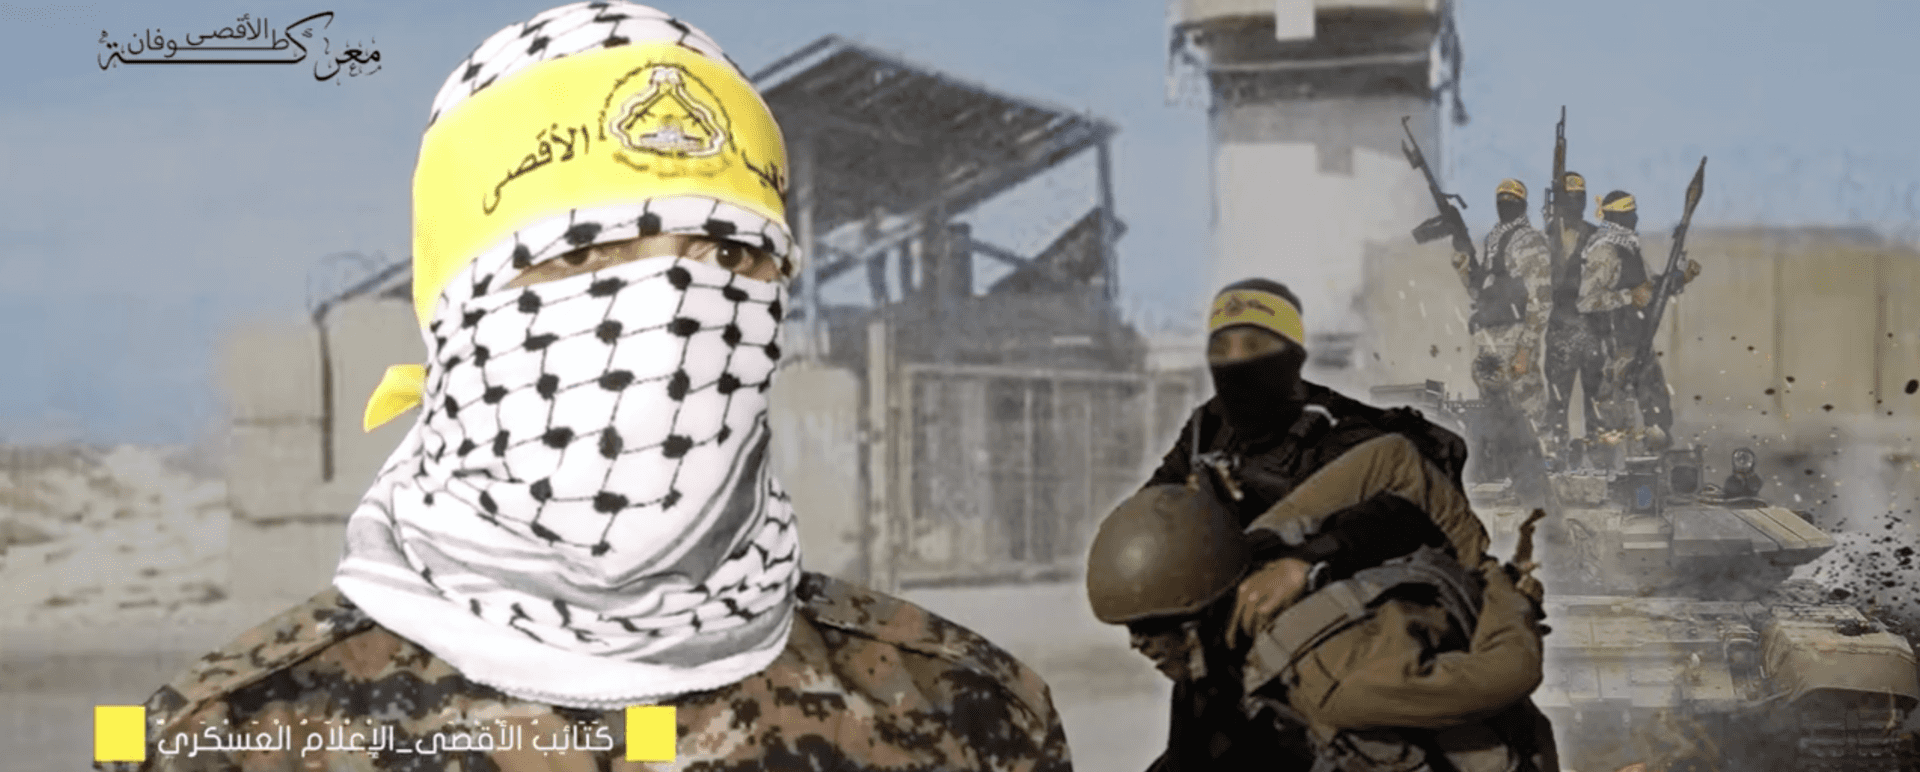 Hamas threatens to execute Israeli hostages on video